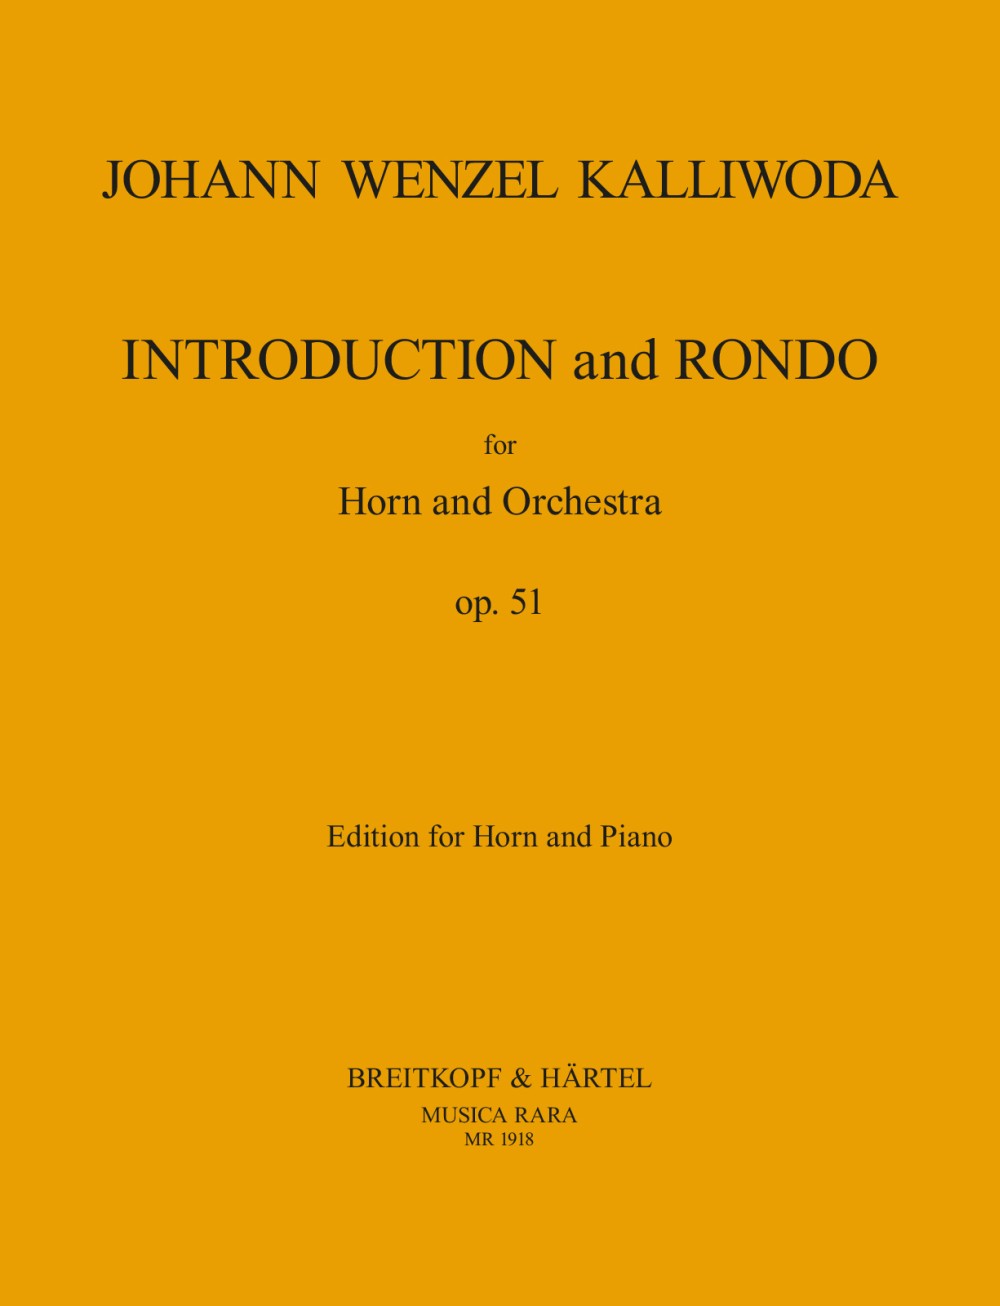 Kalliwoda Introduction and Rondo Op. 51